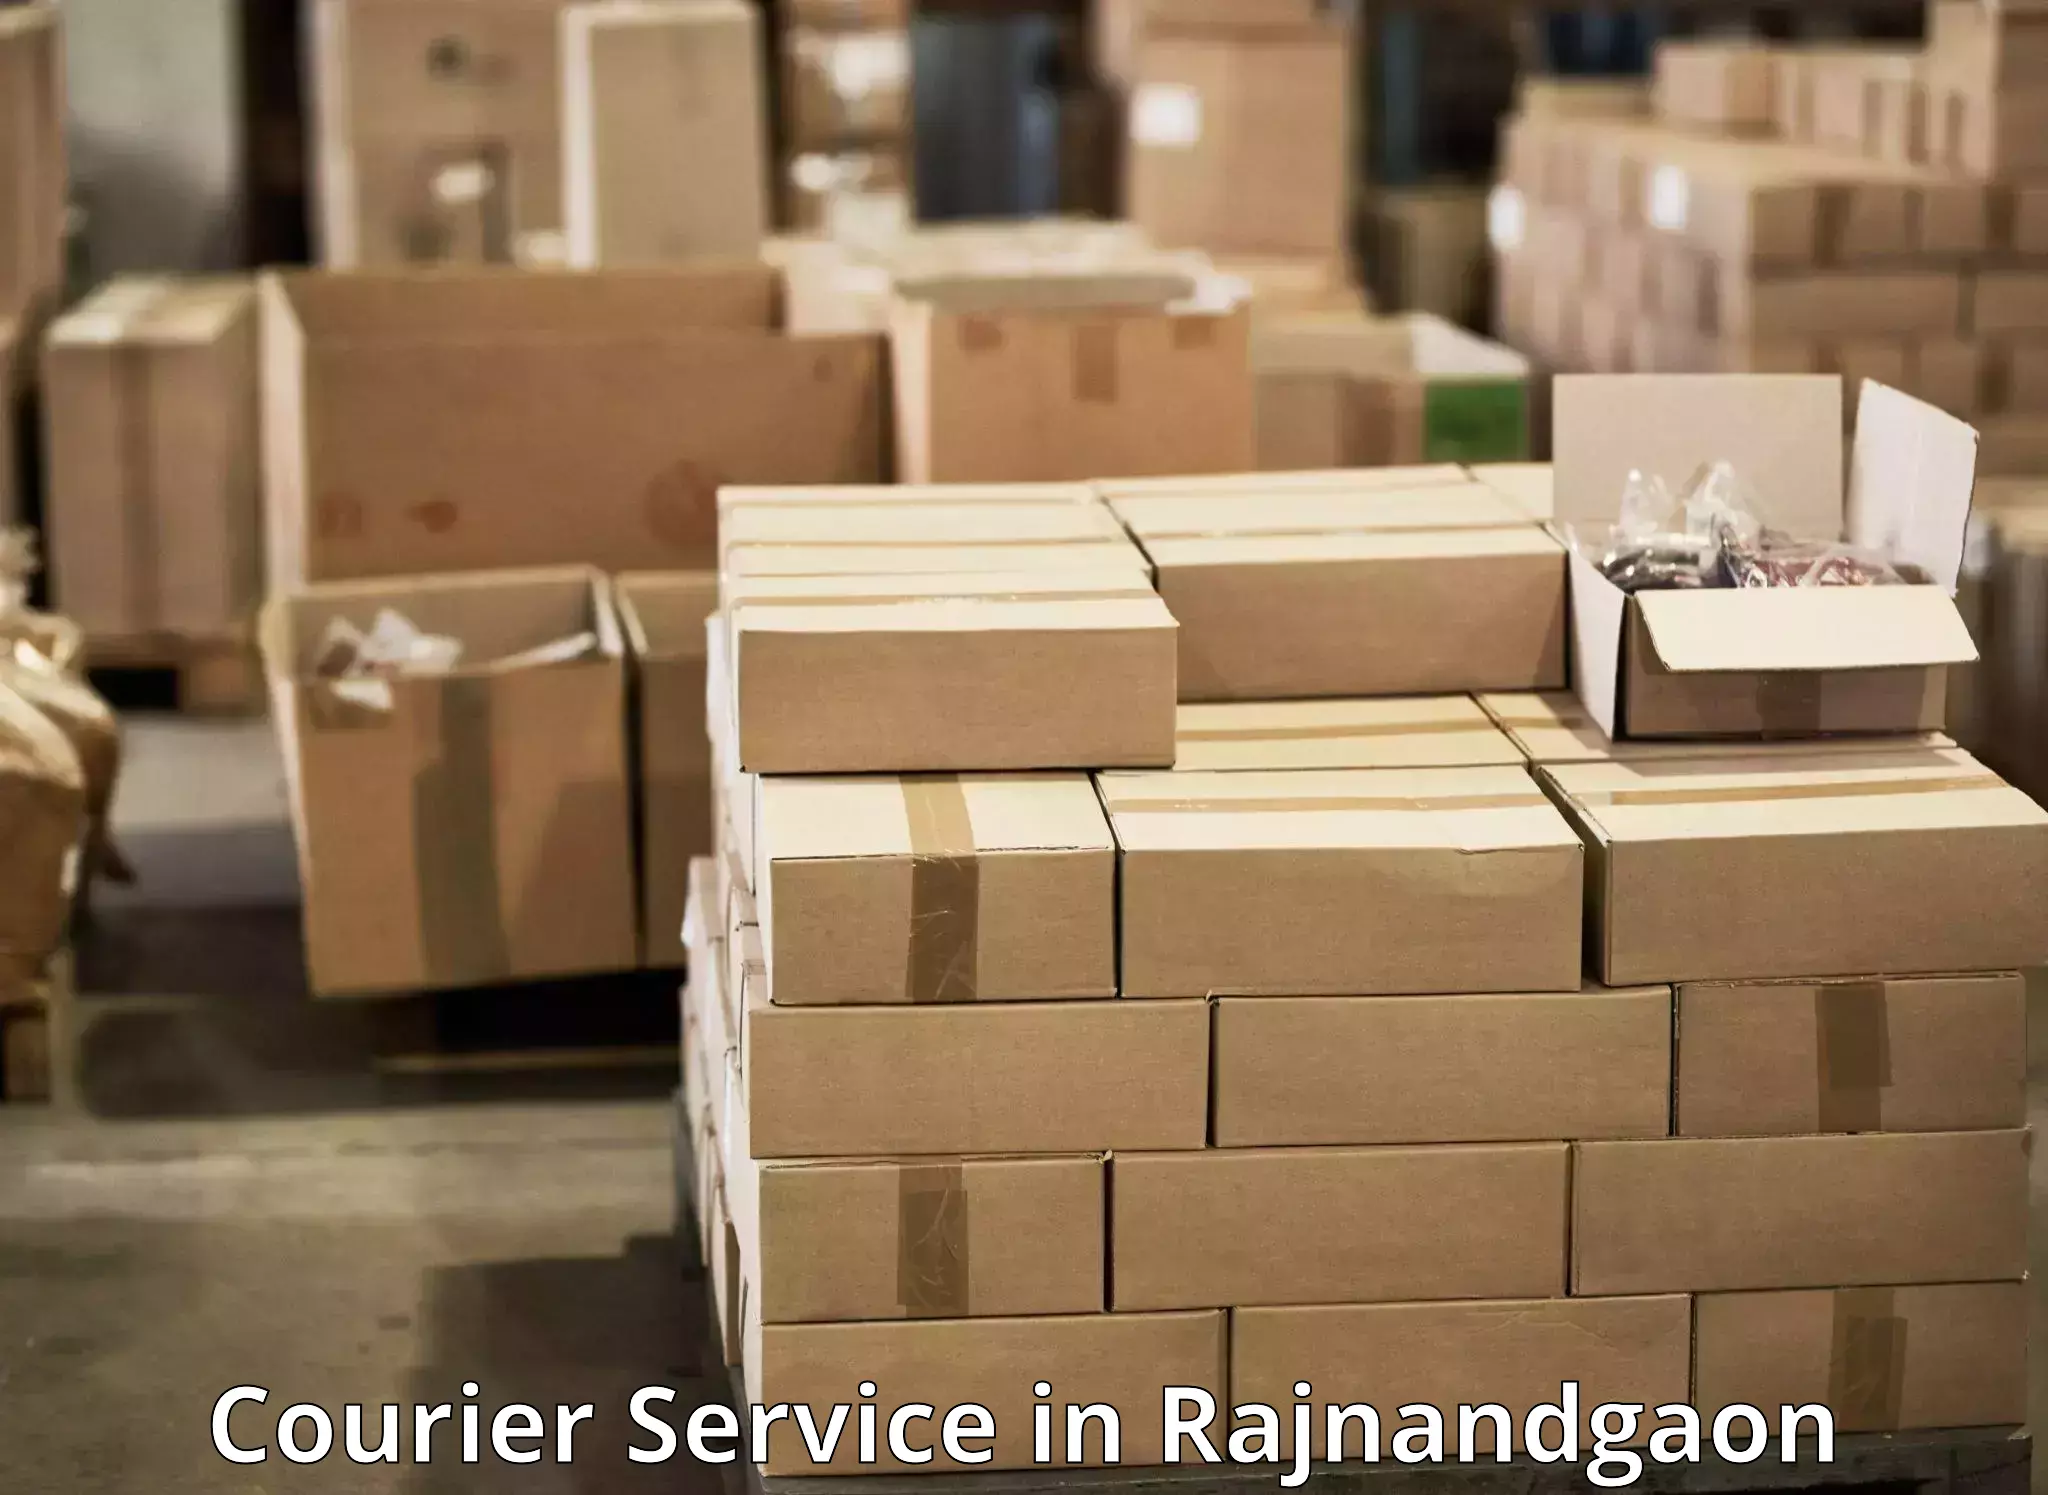 Bulk shipping discounts in Rajnandgaon